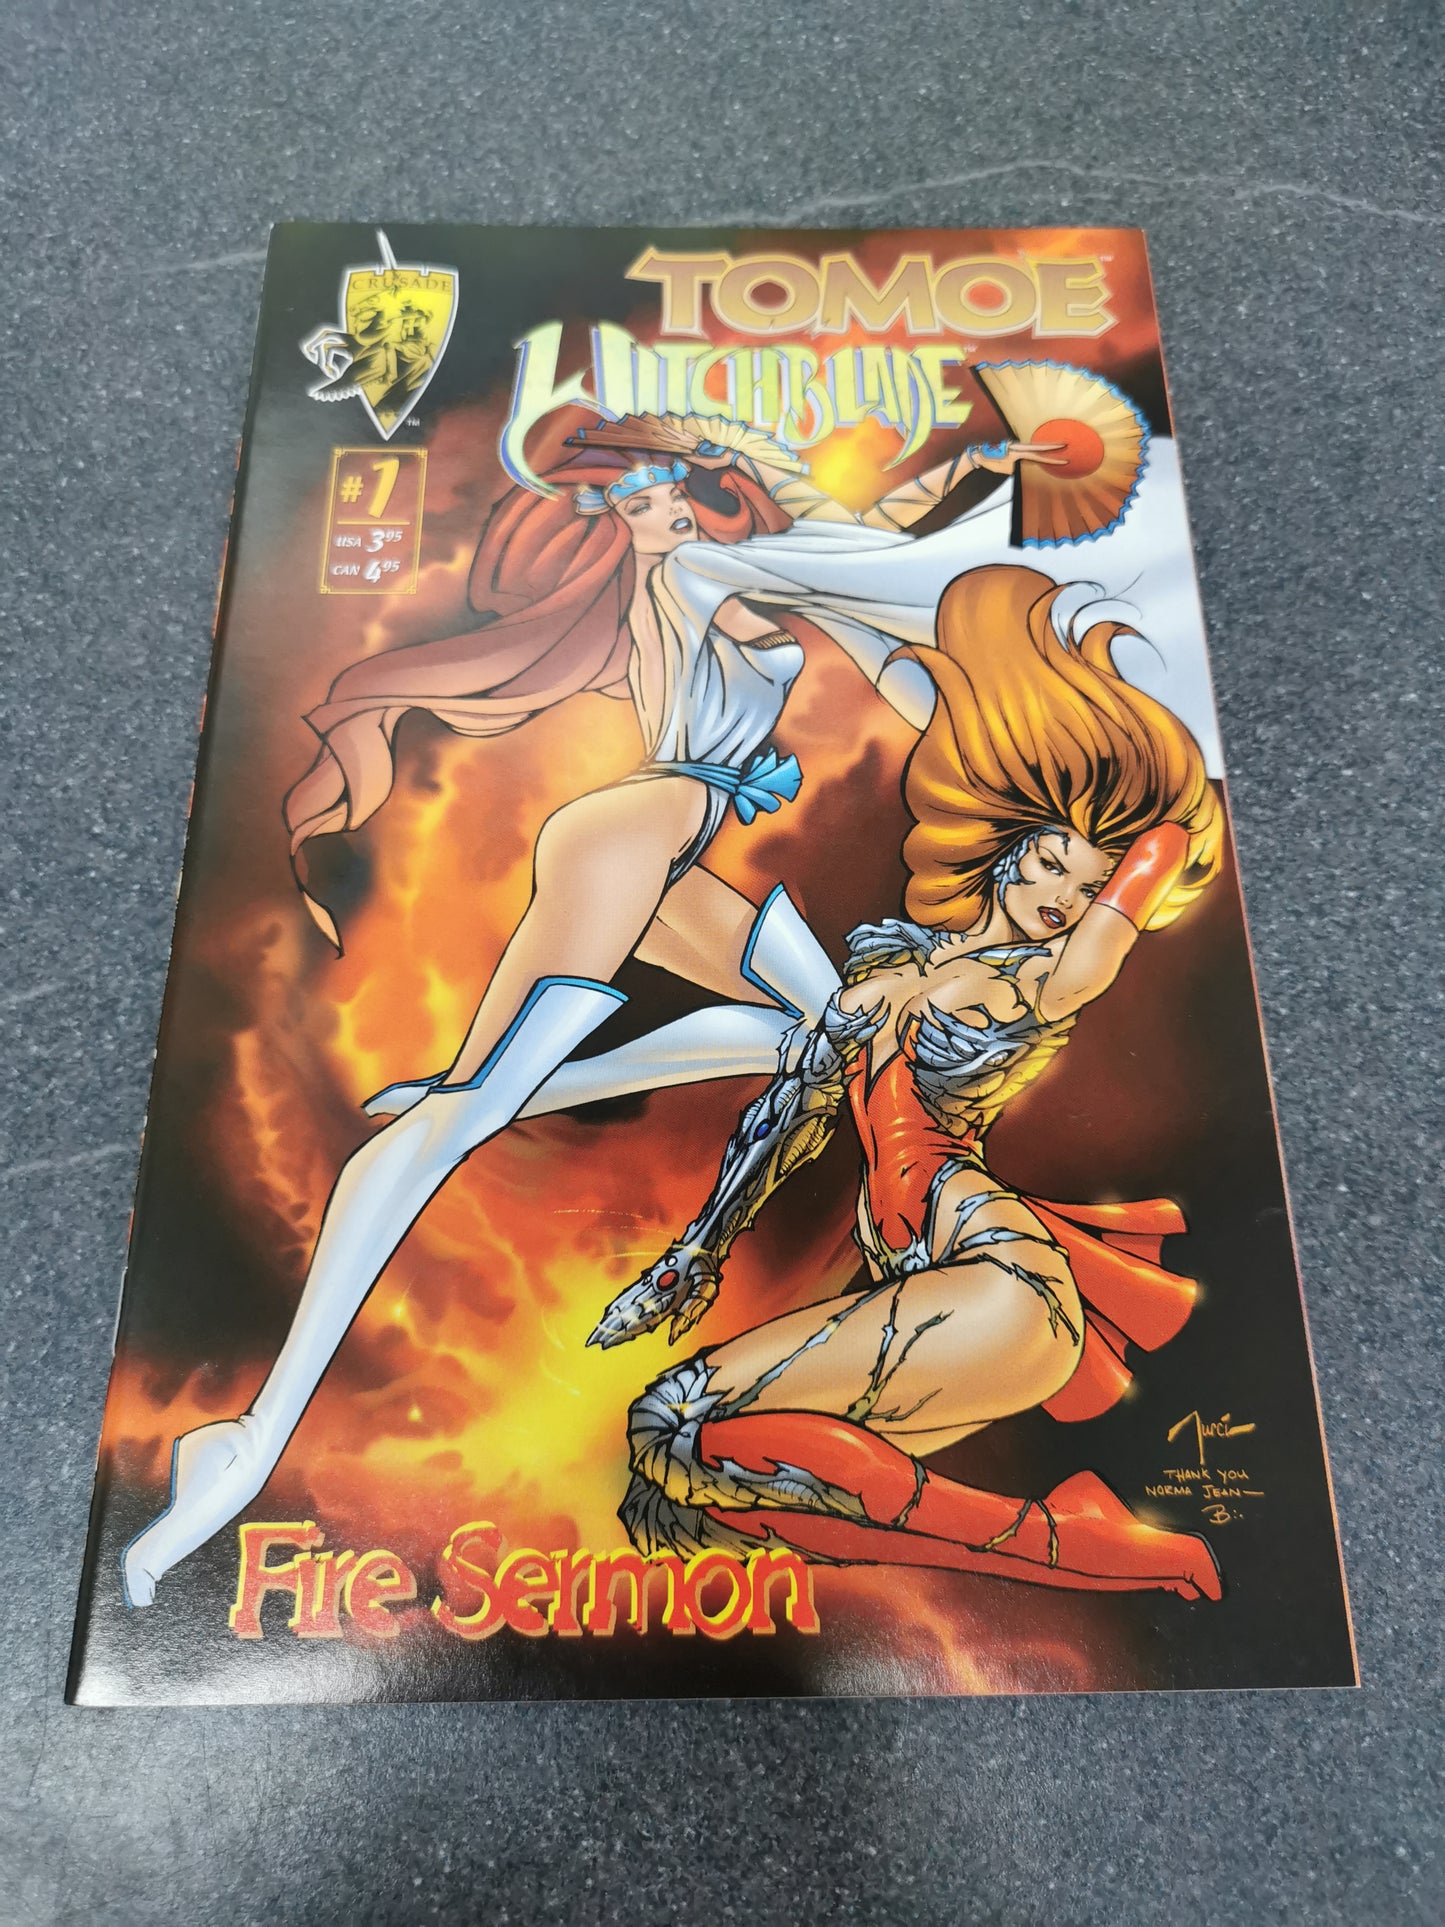 Tomoe Witchblade Fire Sermon #1 1996 one shot Crusade comics